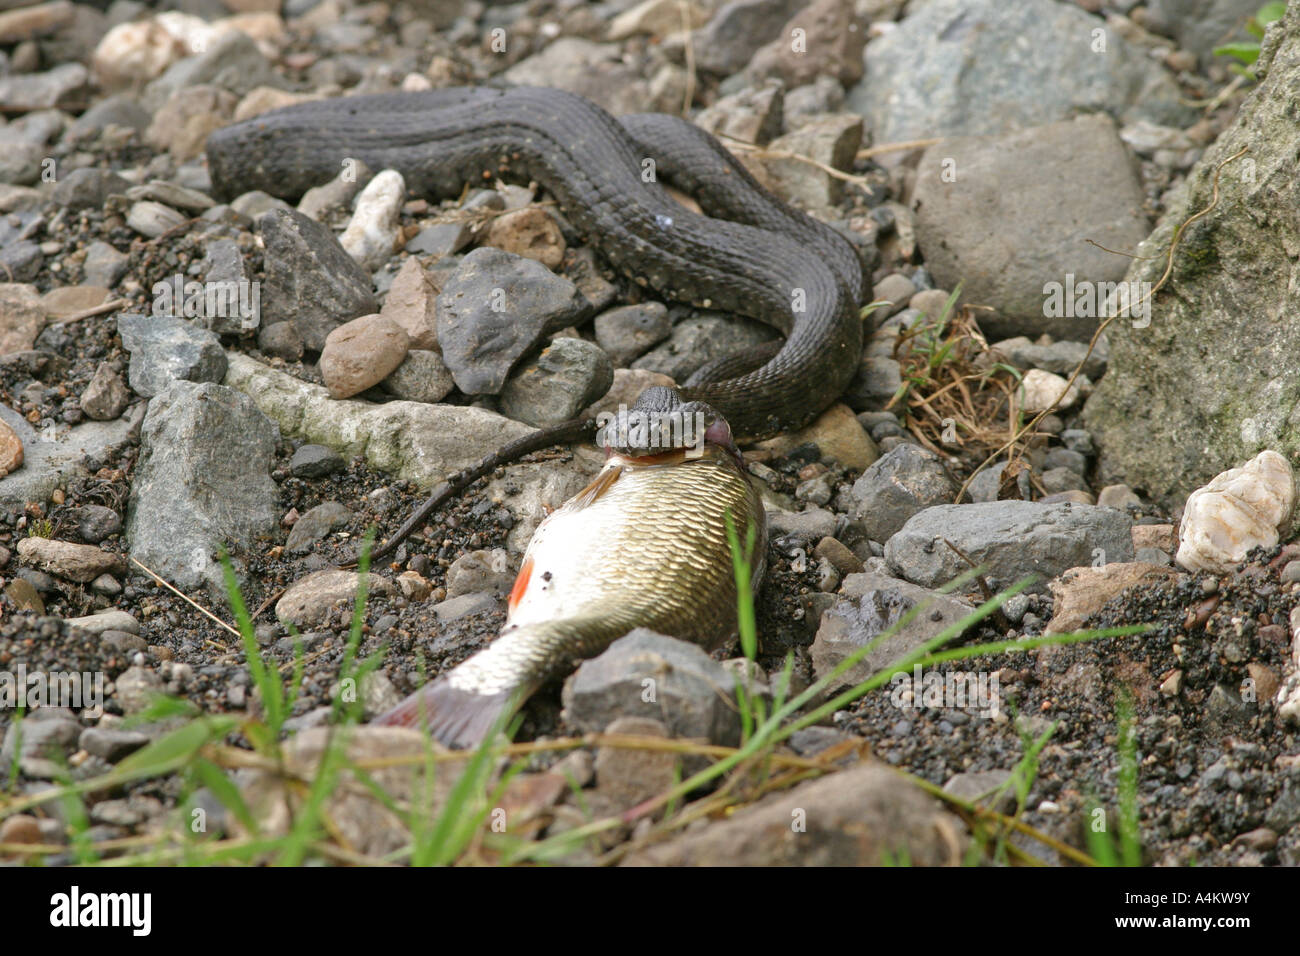 Dice Snake, Natrix tessellata, eats fish Stock Photo